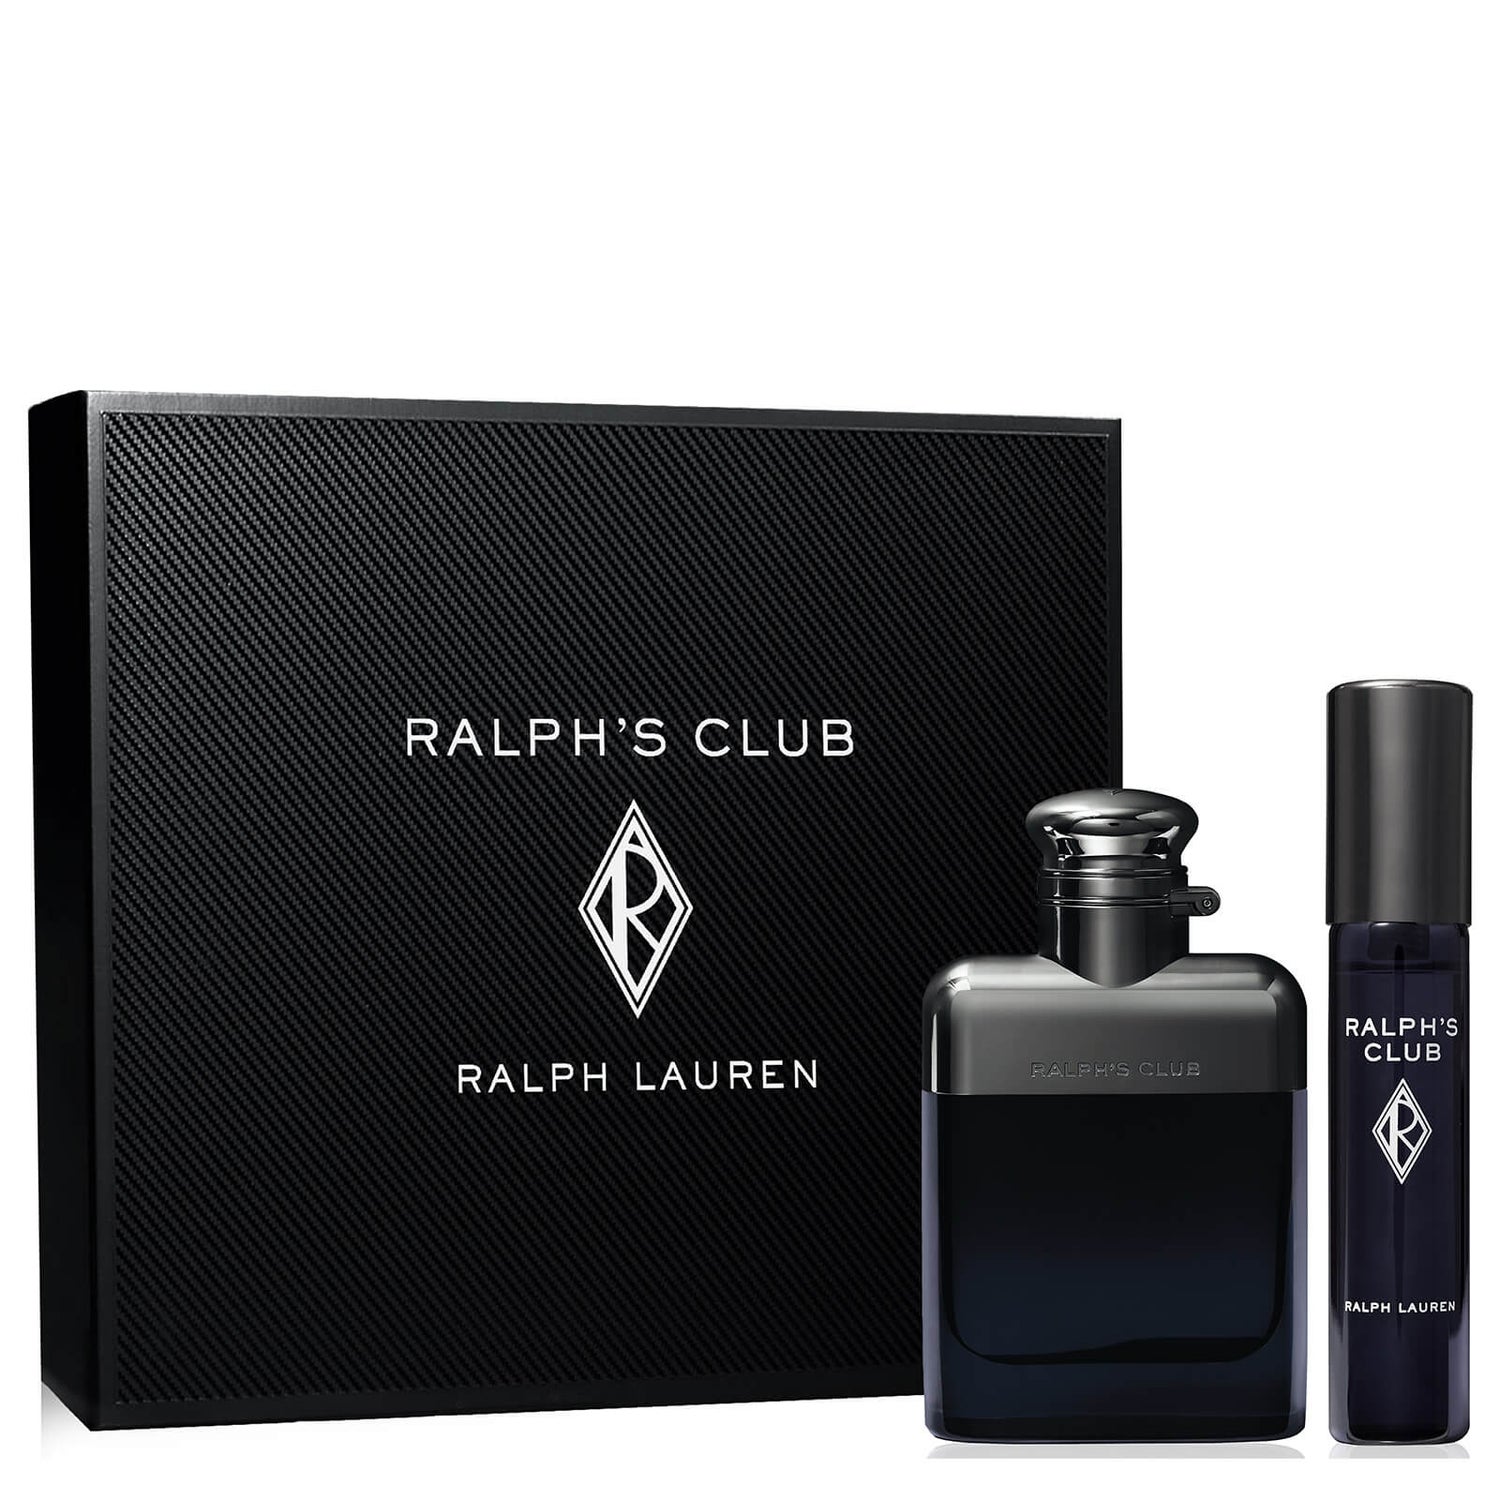 Ralph Lauren Ralph's Club Eau de Toilette Gift Set 50ml (Worth £64.00)